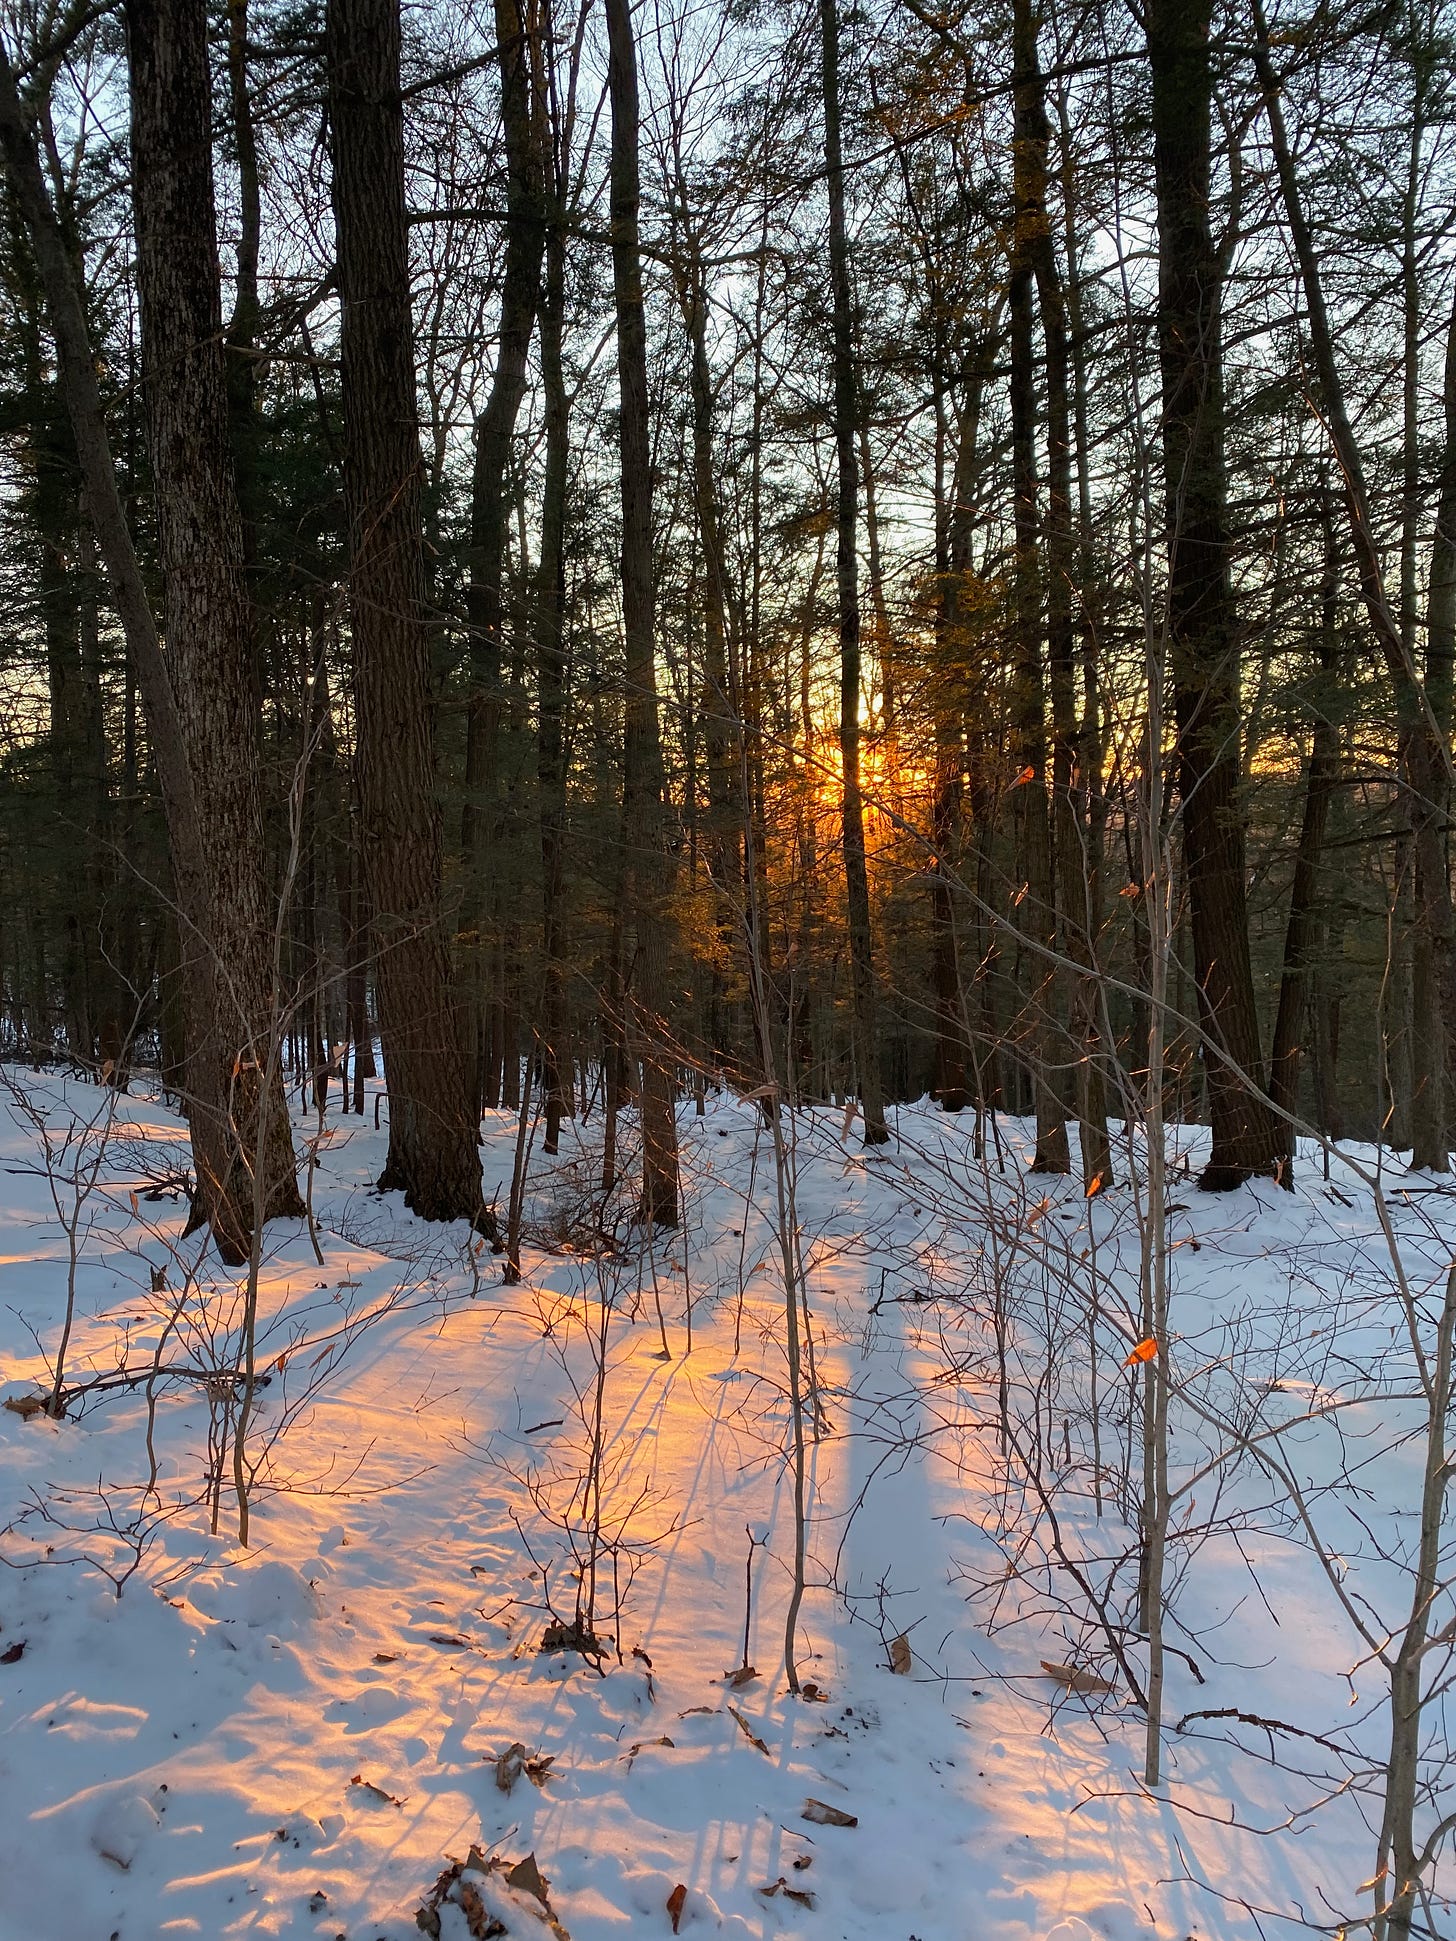 The setting sun casts long golden shadows on the snowy forest floor.